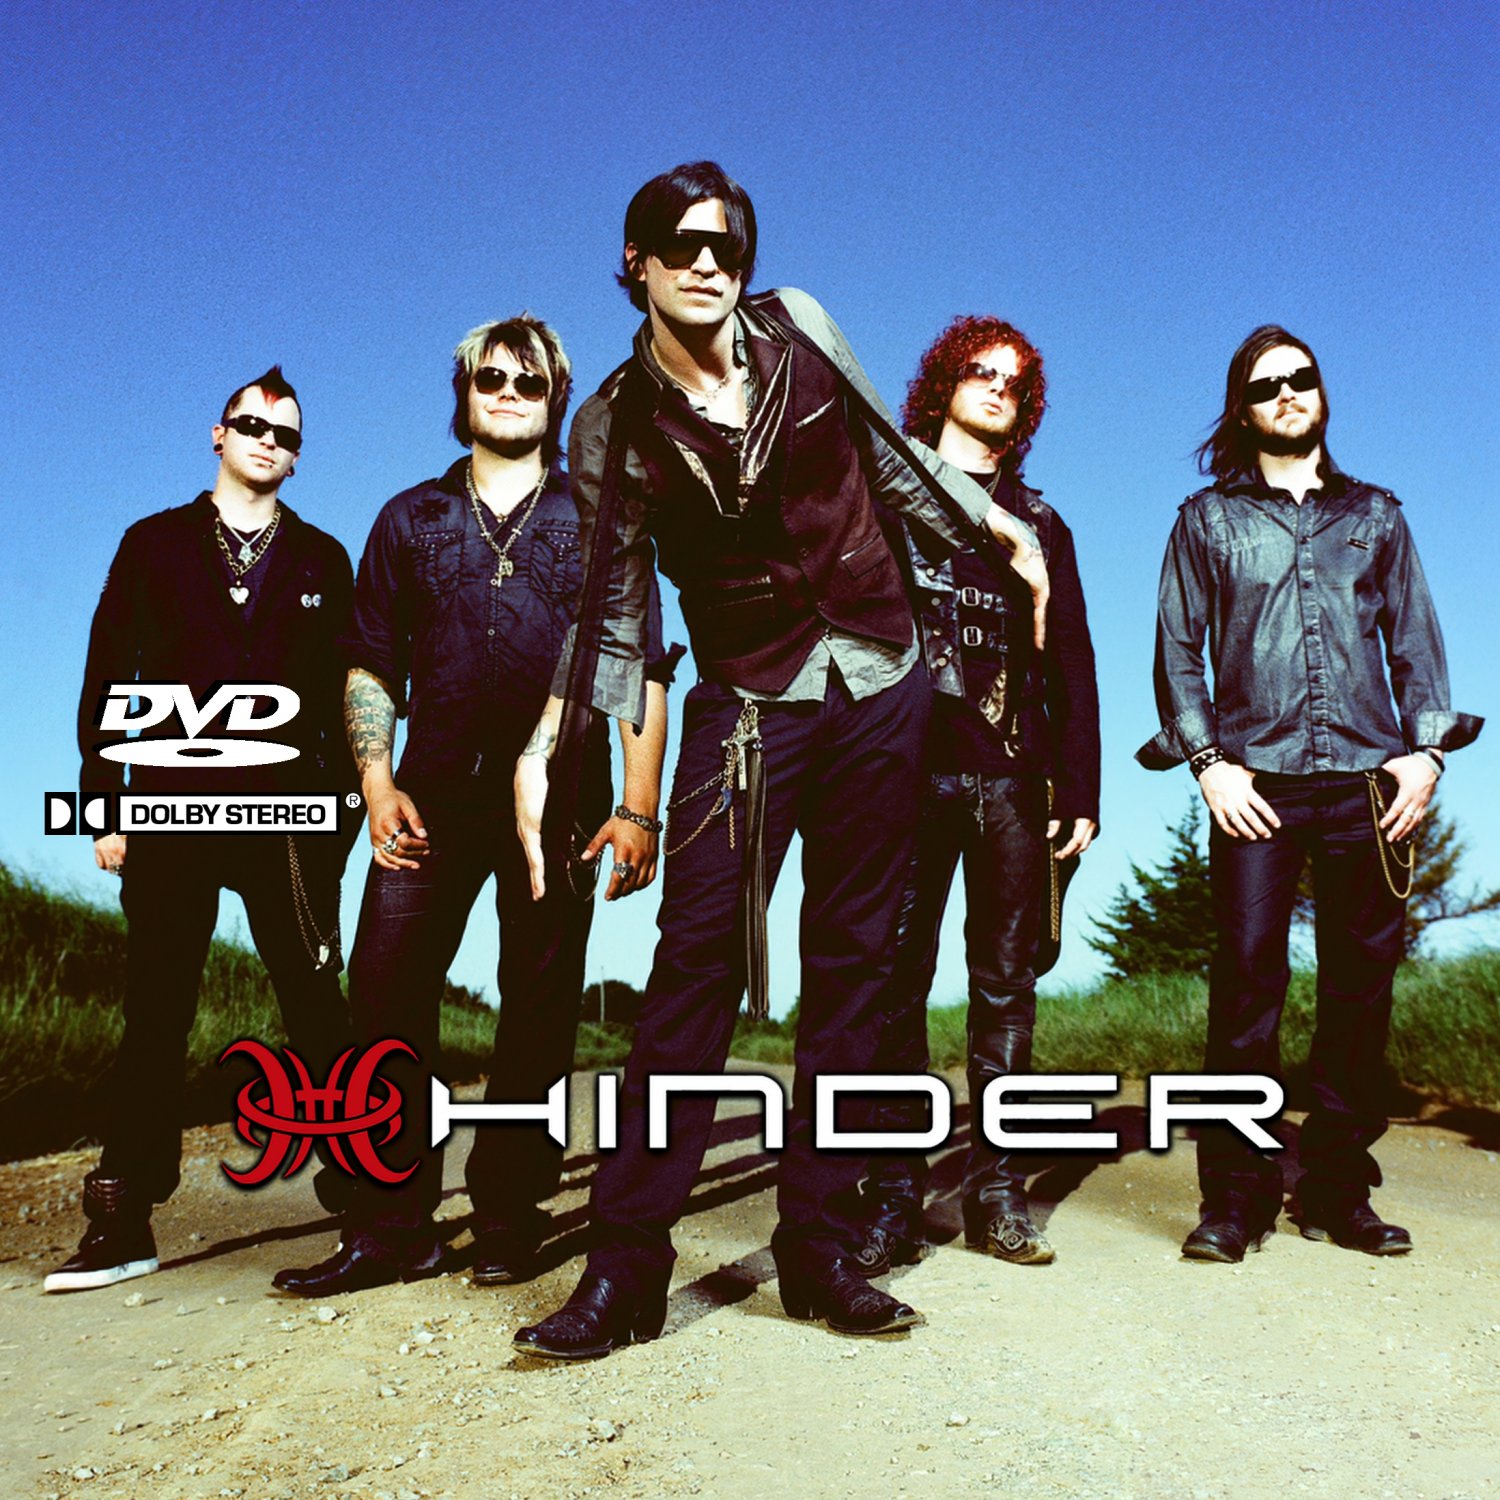 Hinder Music Videos Collection (1 DVD) 14 Music Videos